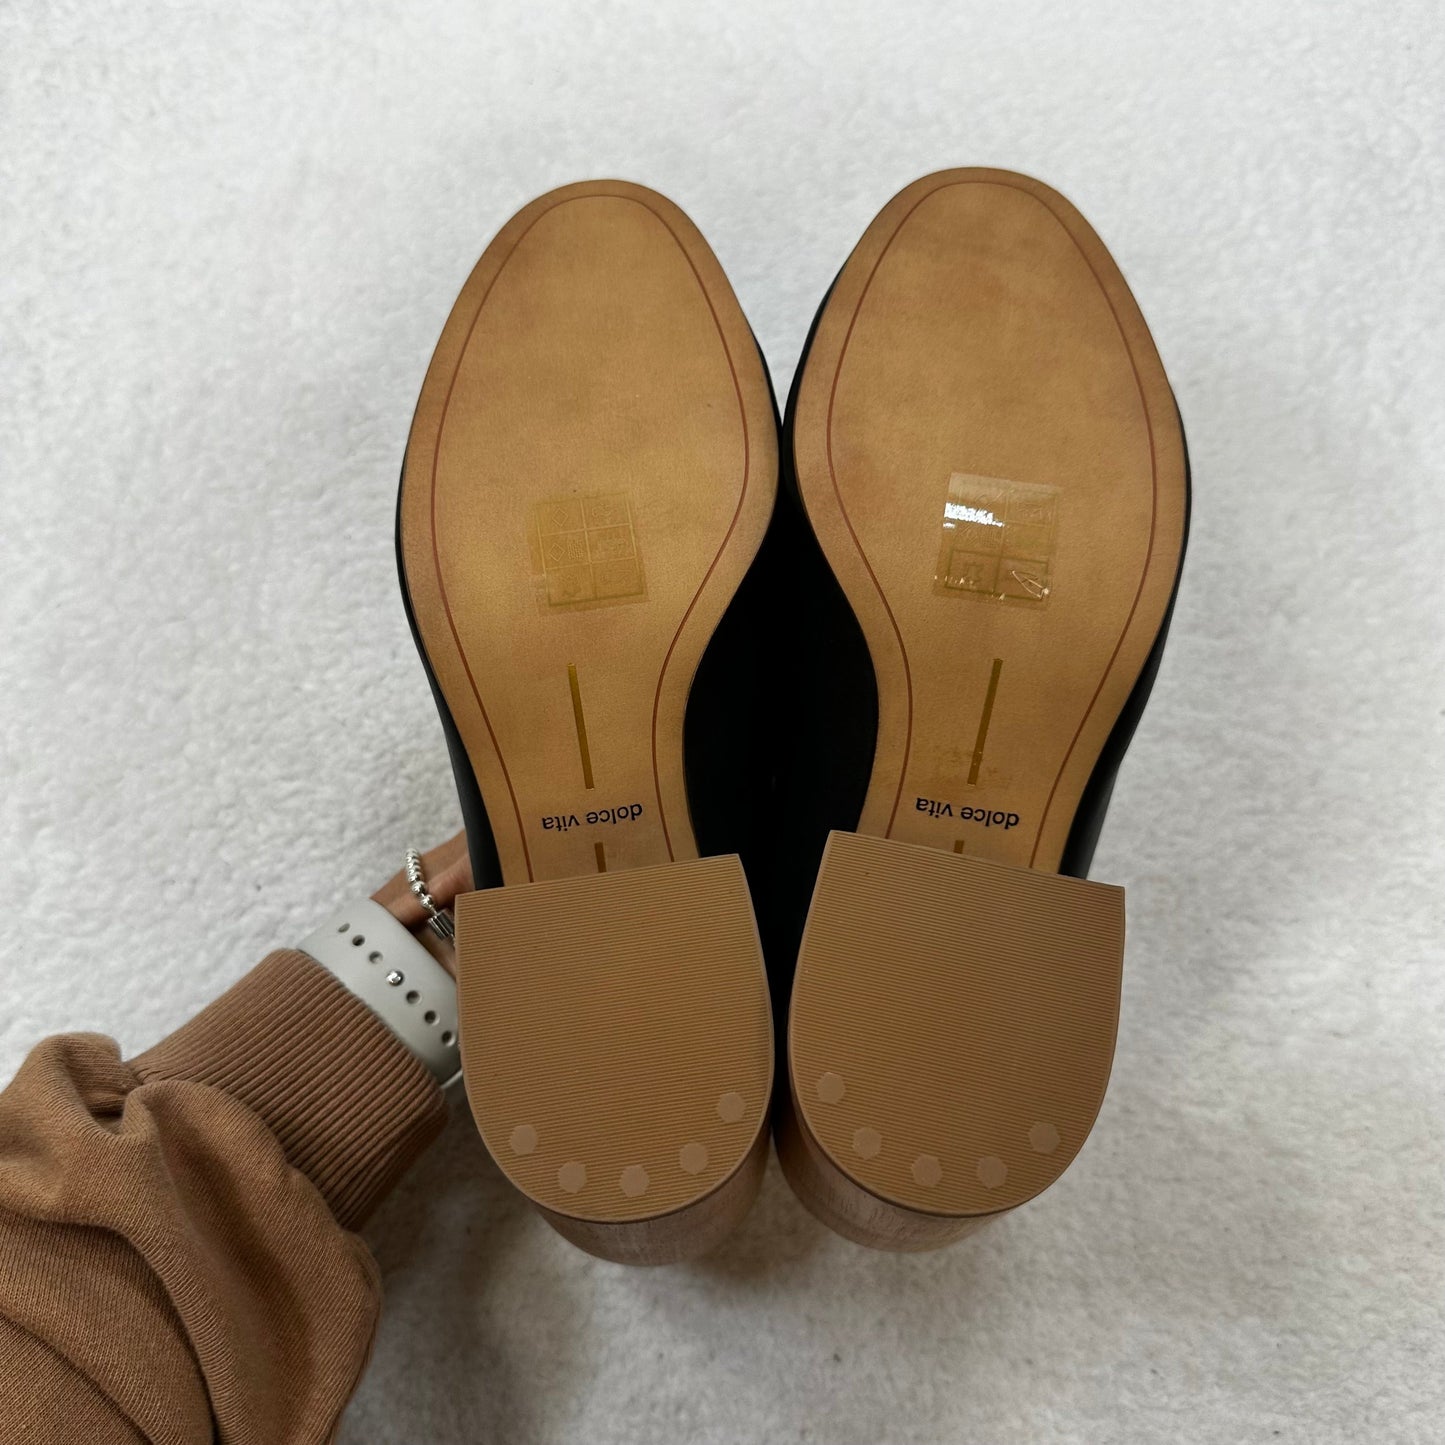 Black Shoes Heels Block Dolce Vita, Size 9.5